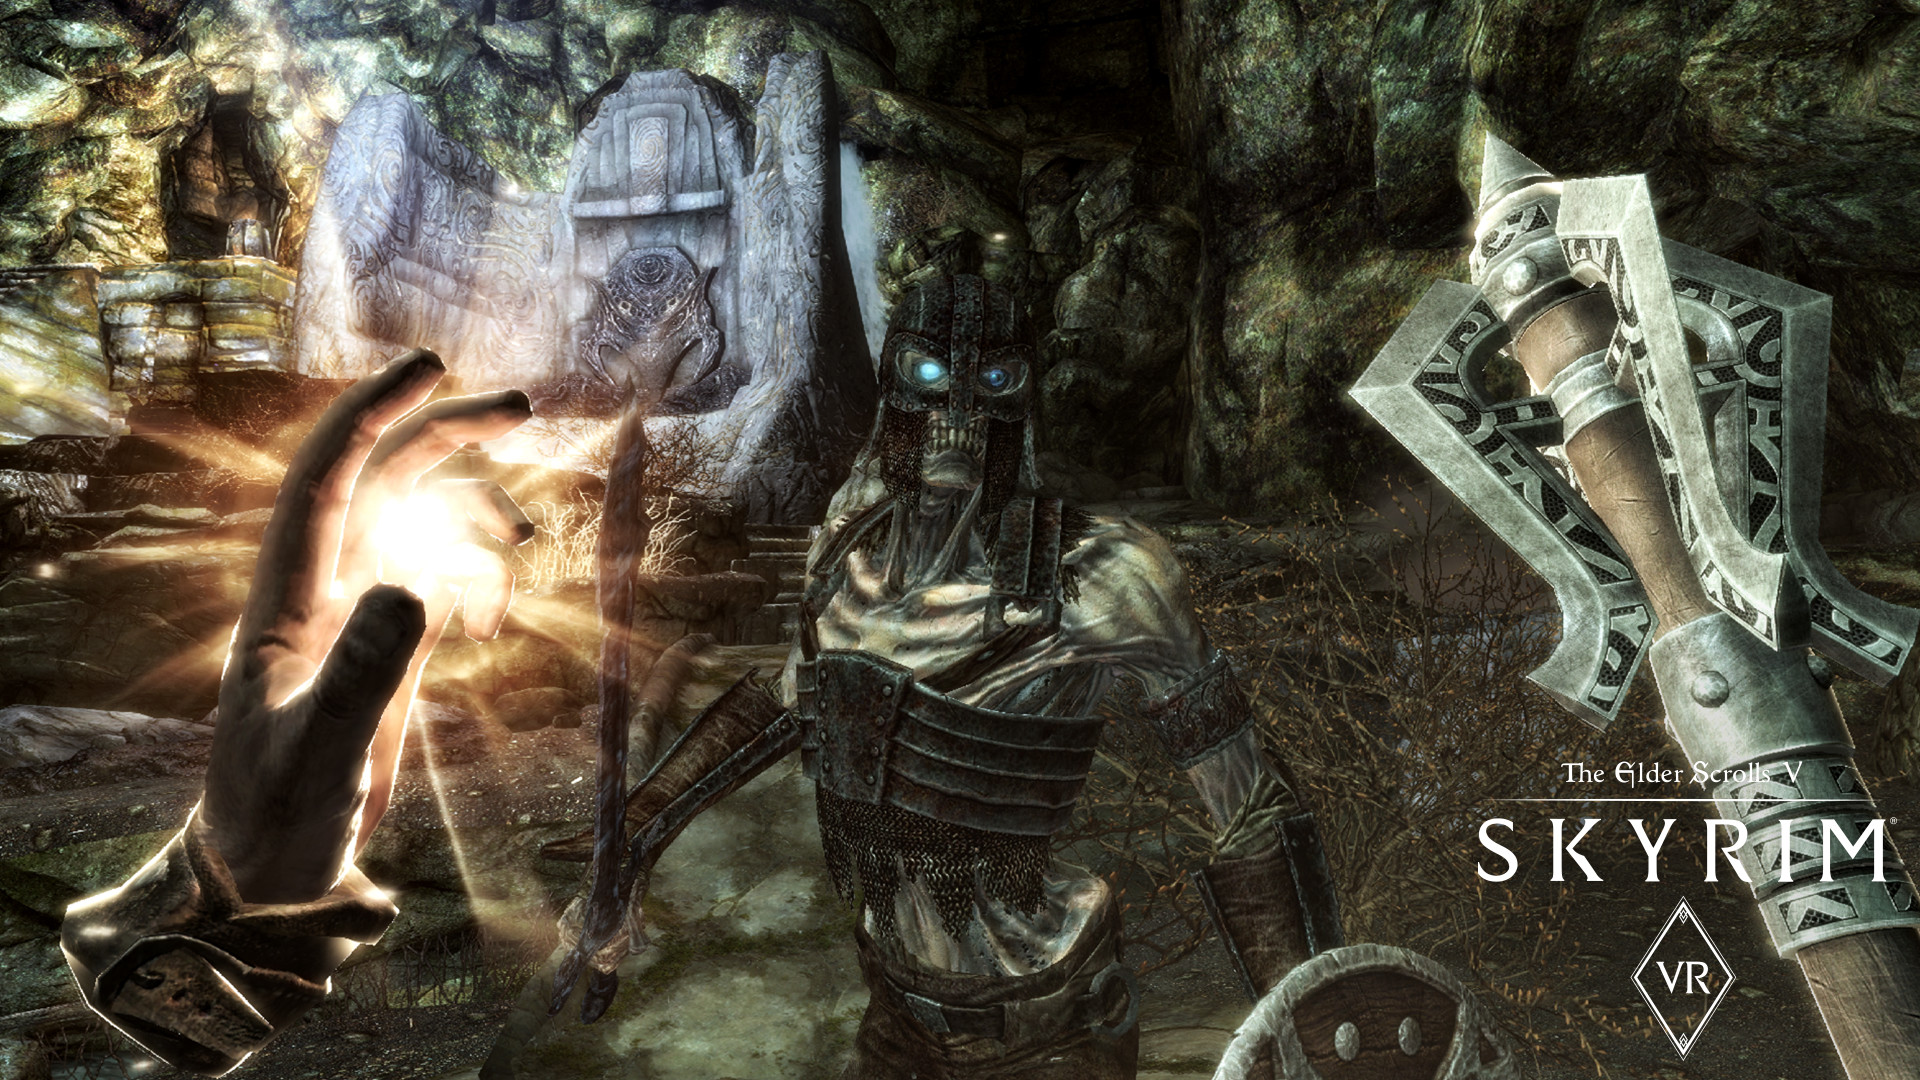 The Elder Scrolls V: Skyrim VR screenshot 2